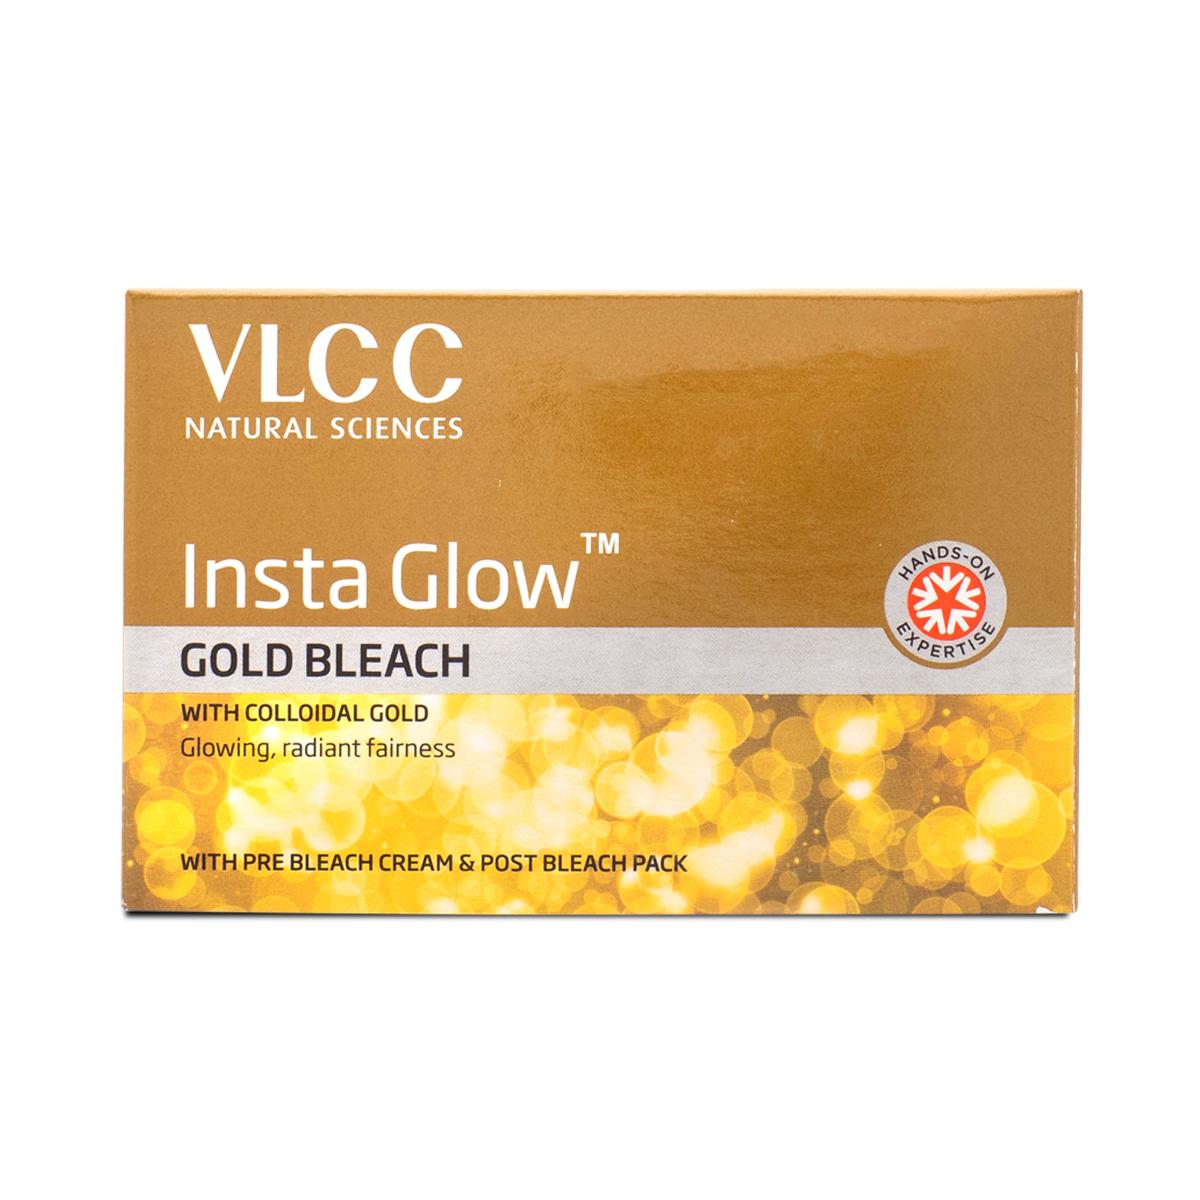 VLCC Insta Glow Gold Bleach - Illuminate Your Skin with Golden Radiance